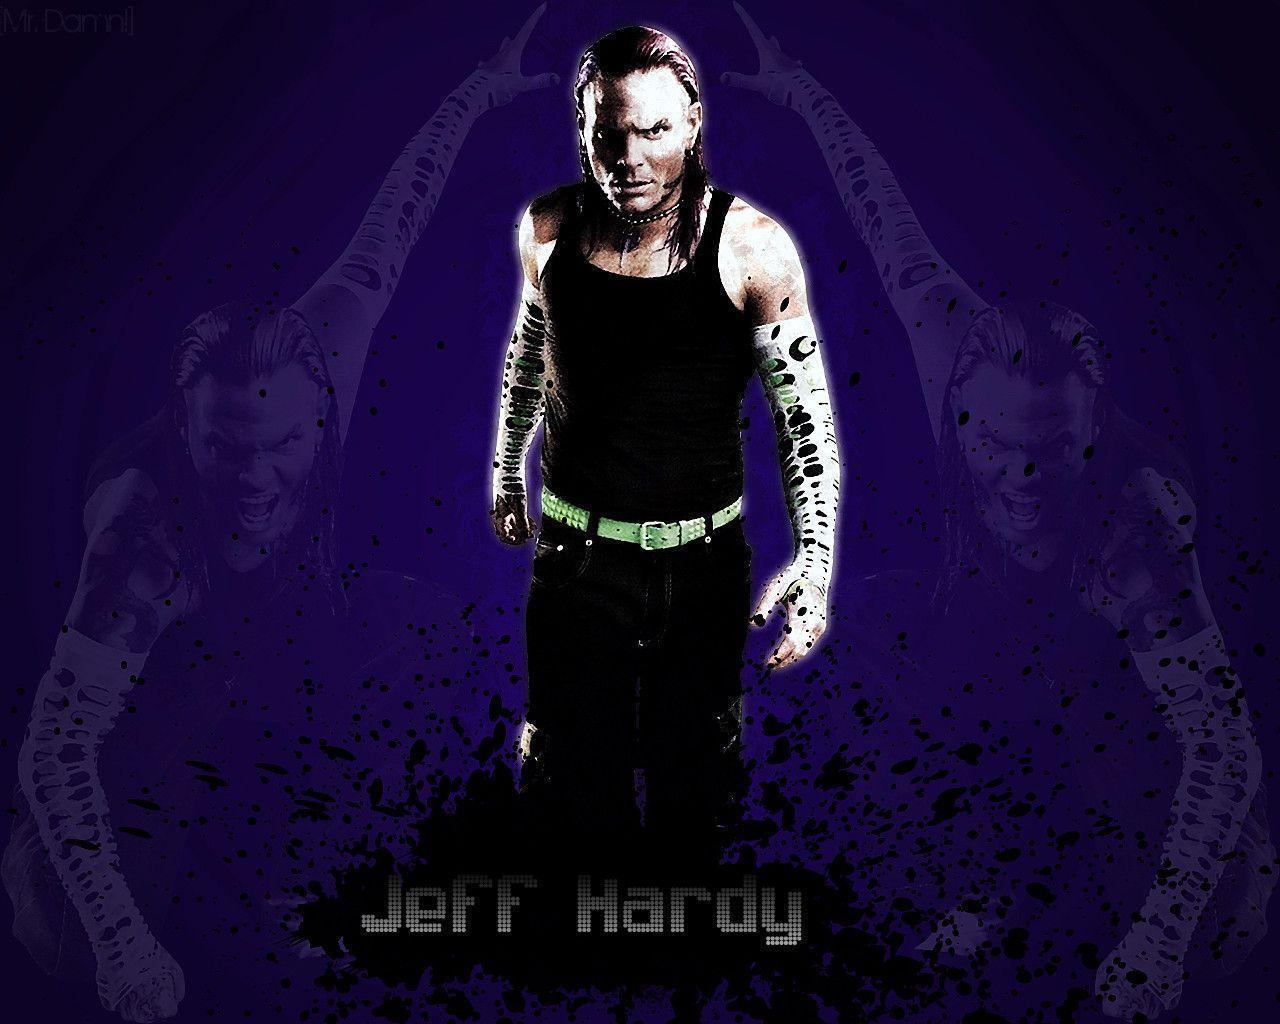 jeff hardy background